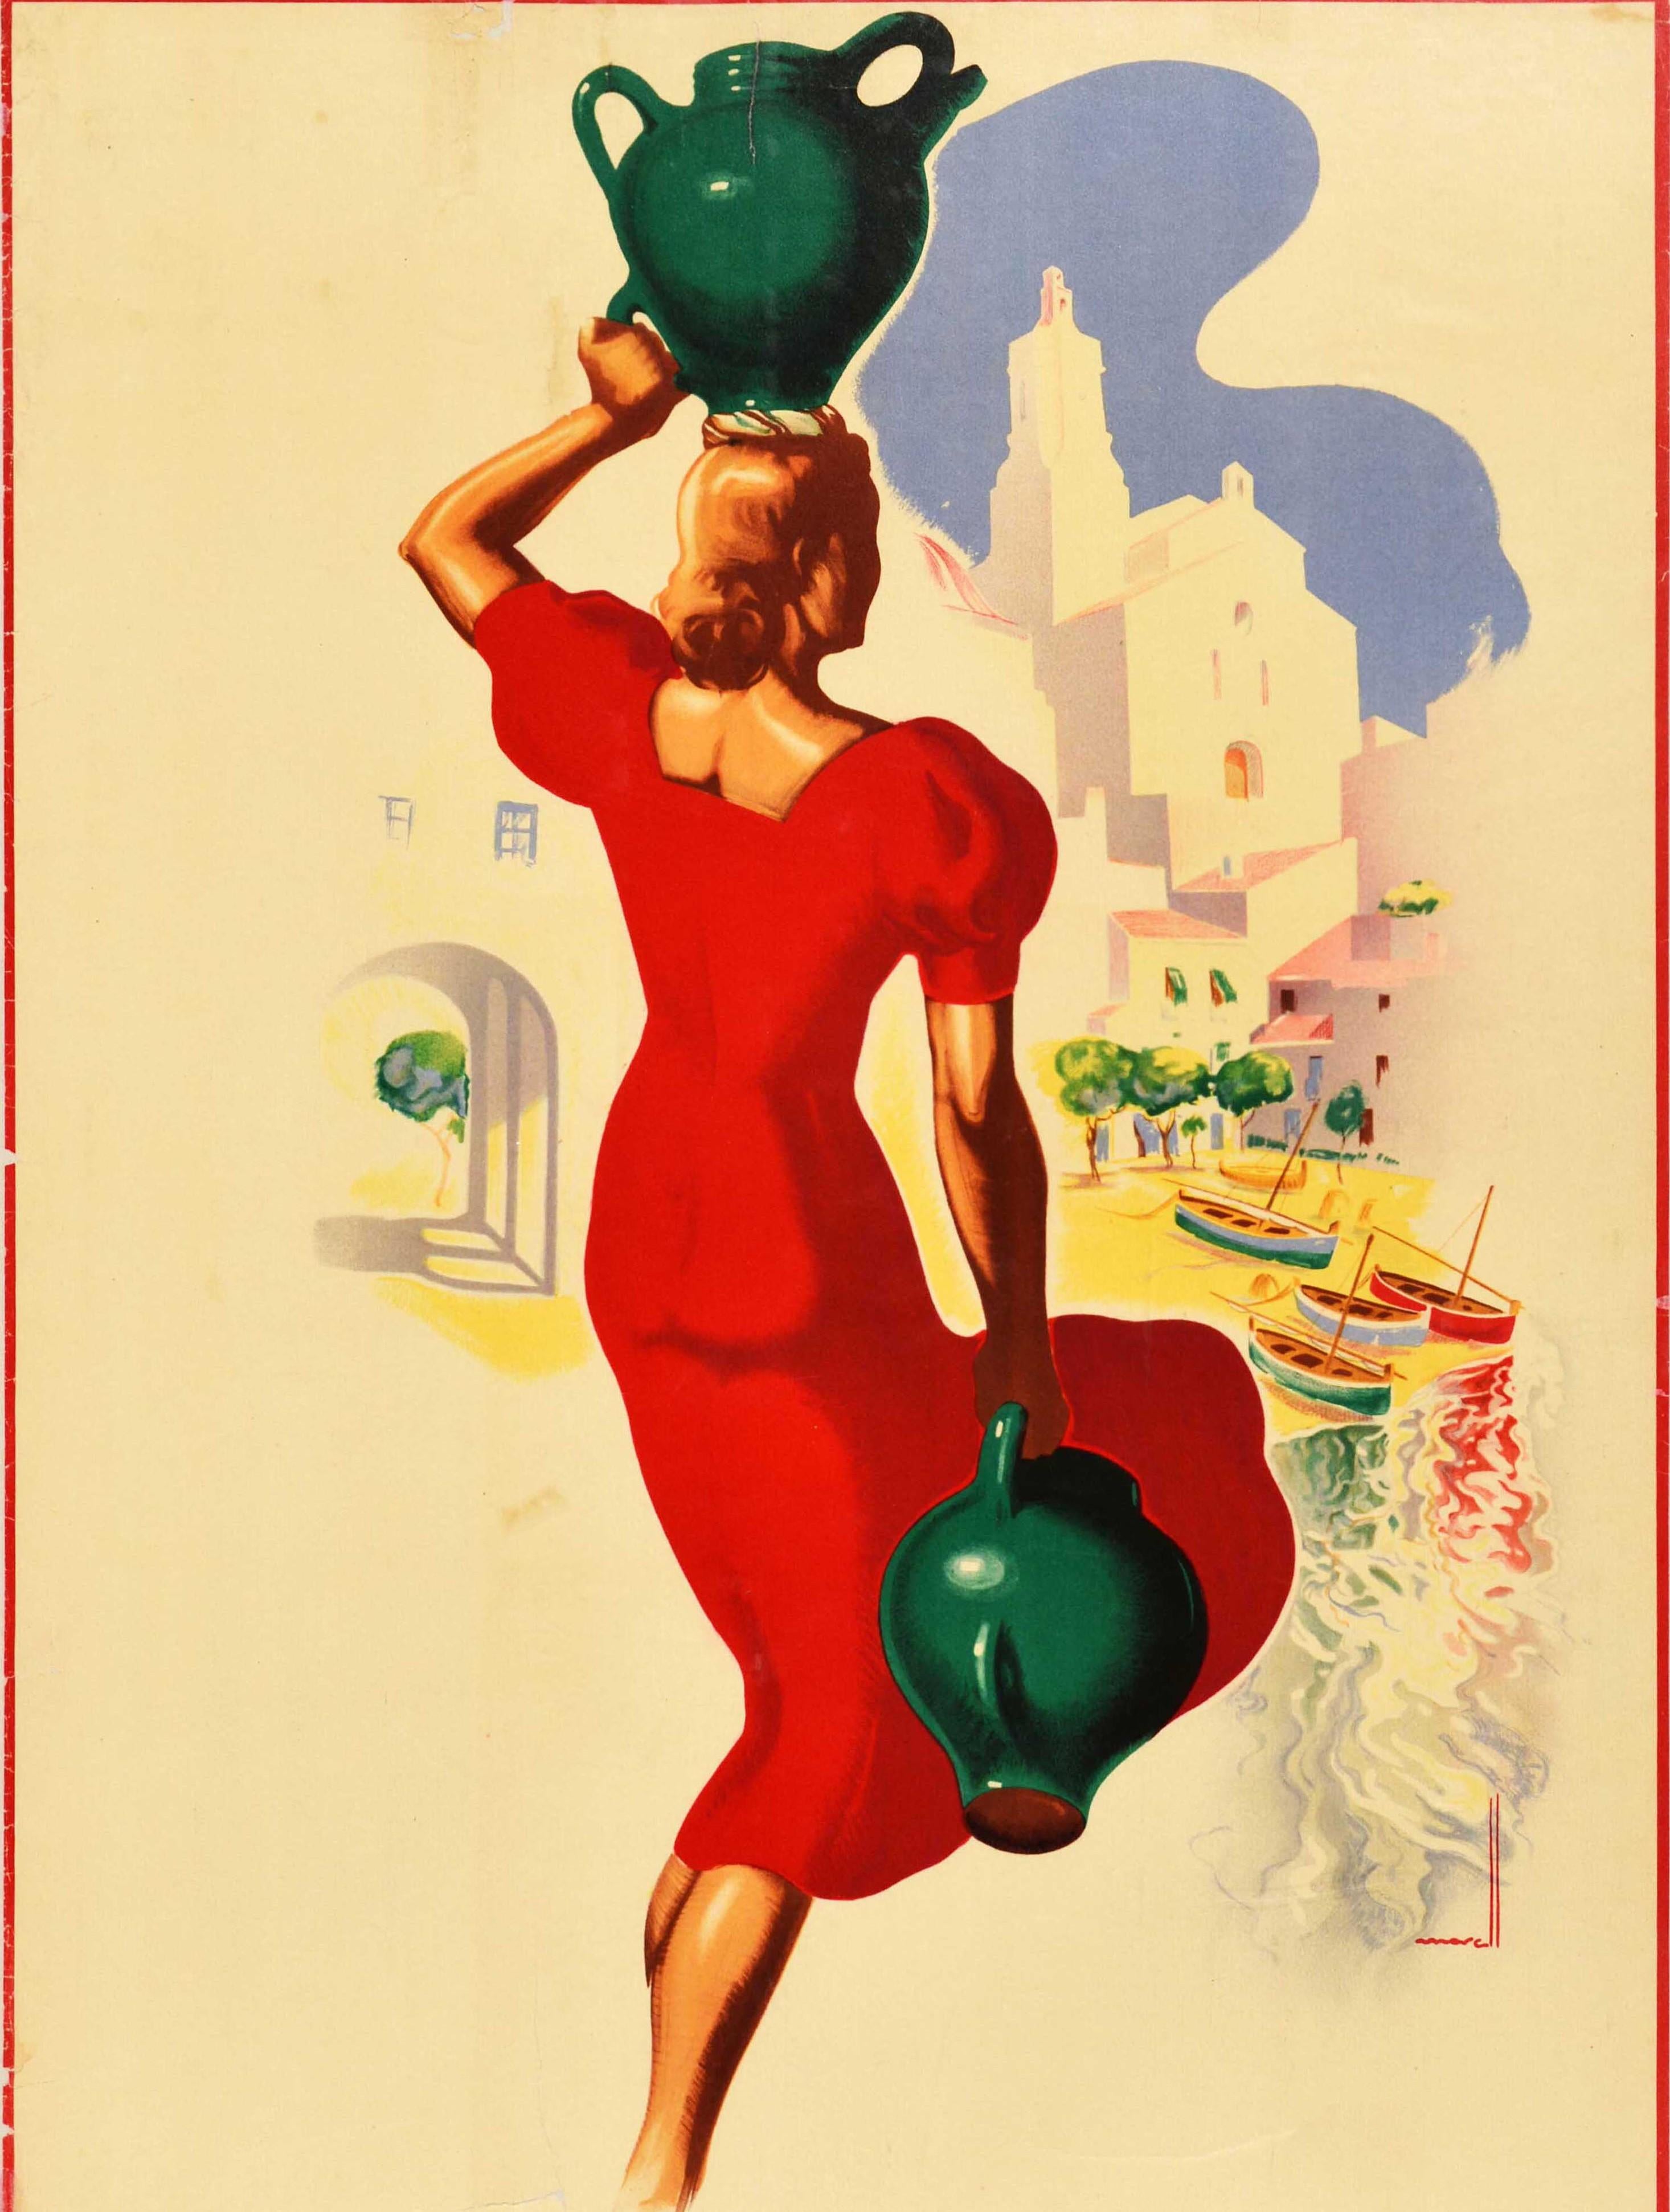 Spanish Original Vintage Travel Poster For Espana Spain Lady In Red Artwork Jose Morell